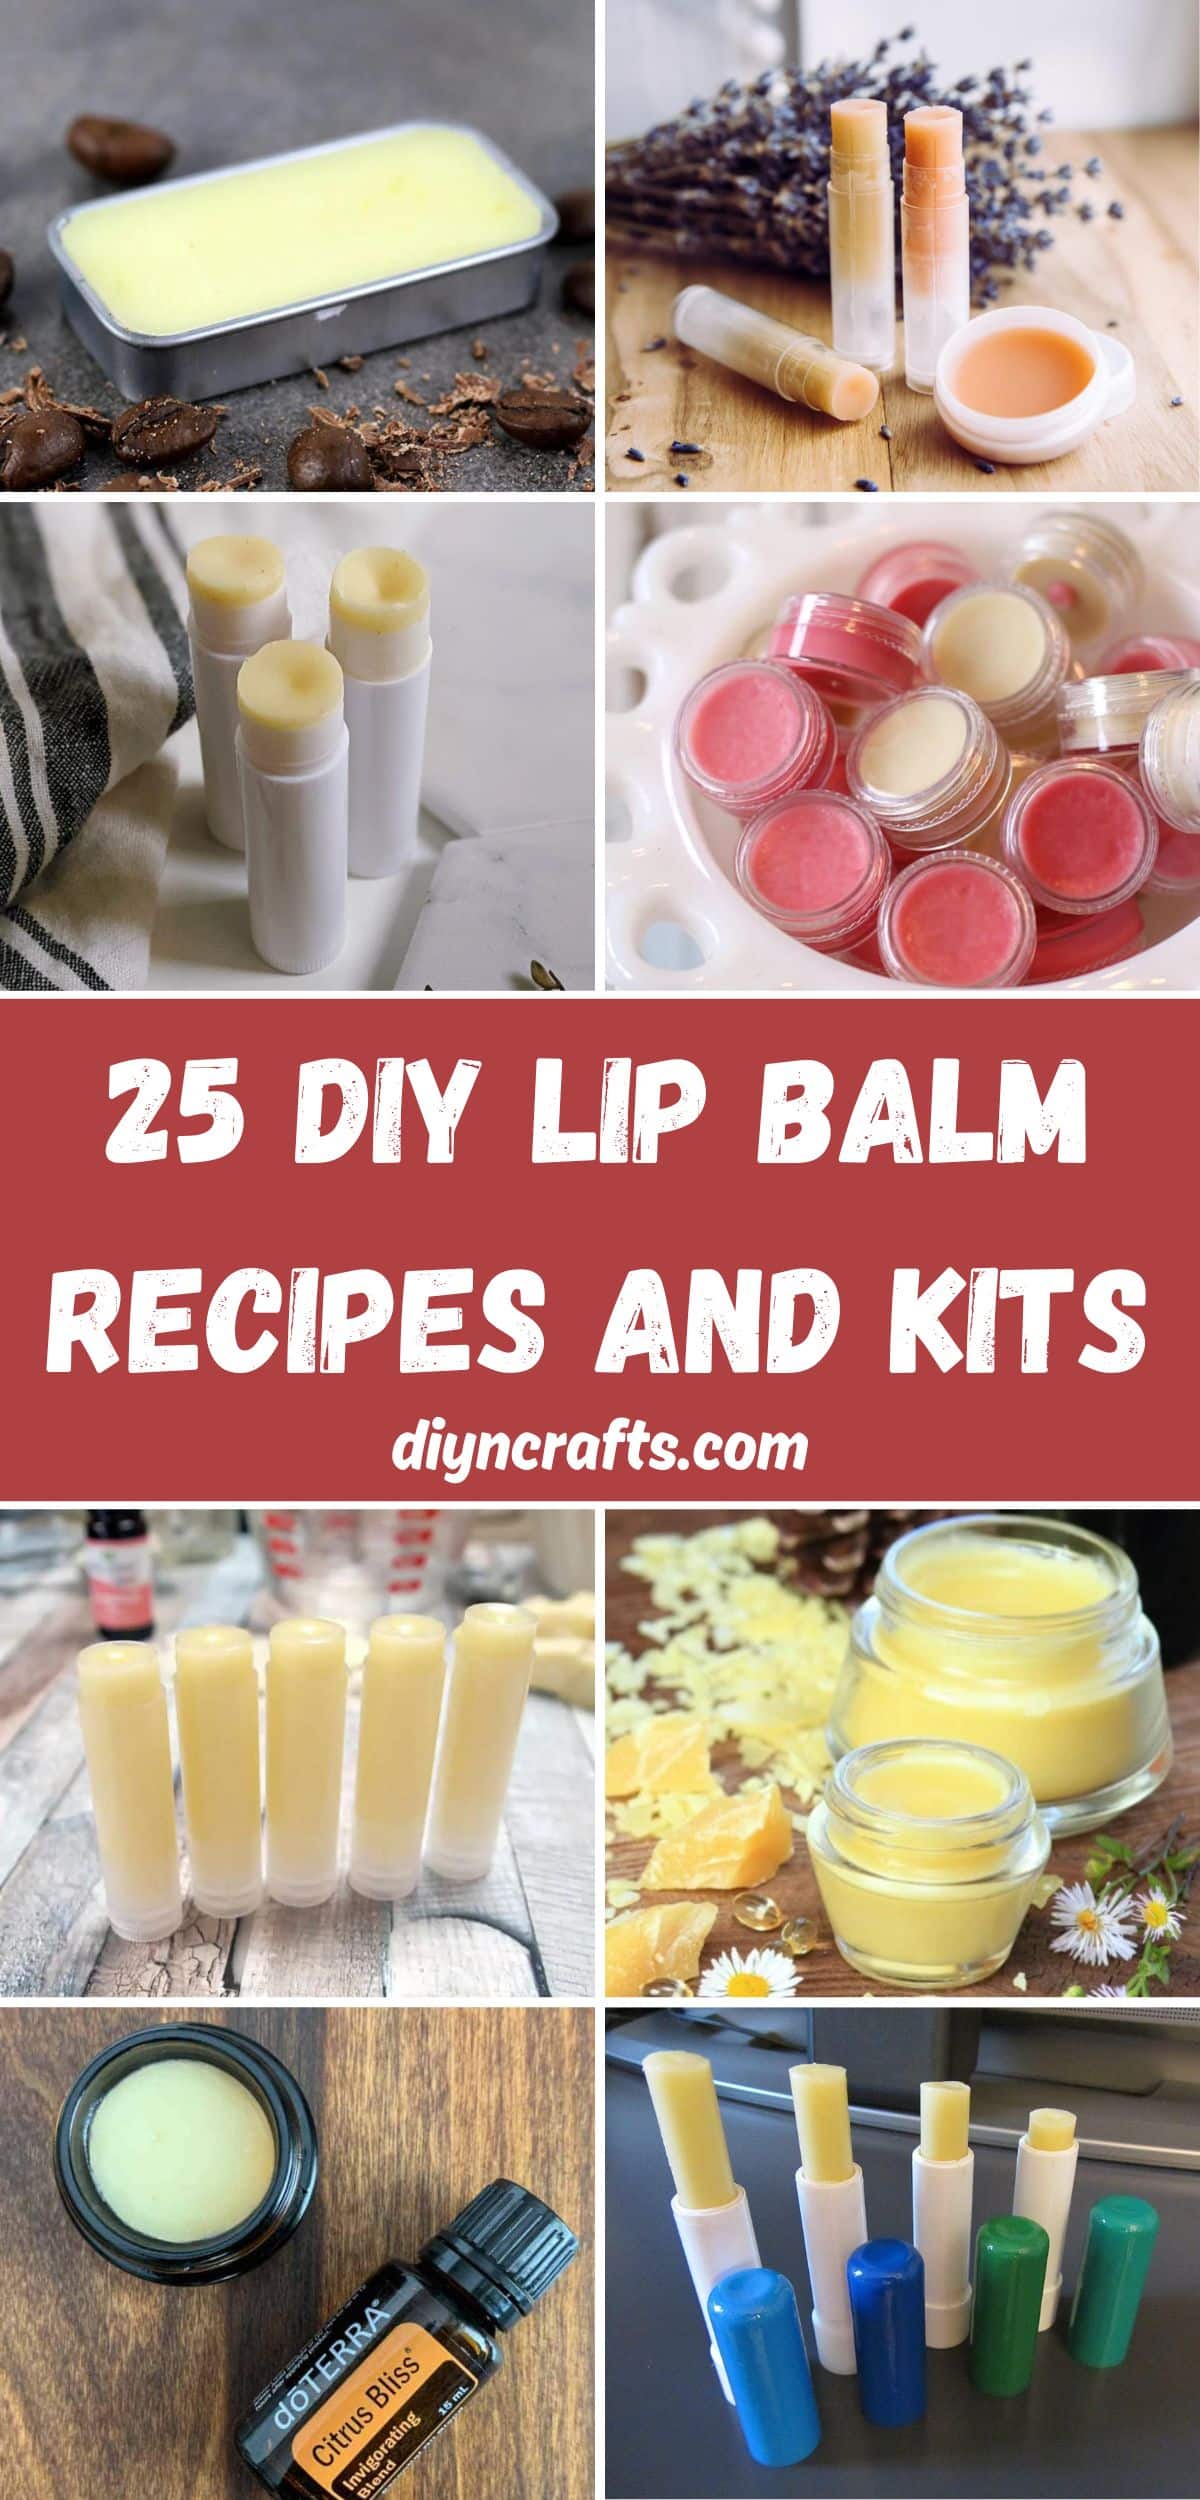 25 DIY Lip Balm Recipes and Kits collage.